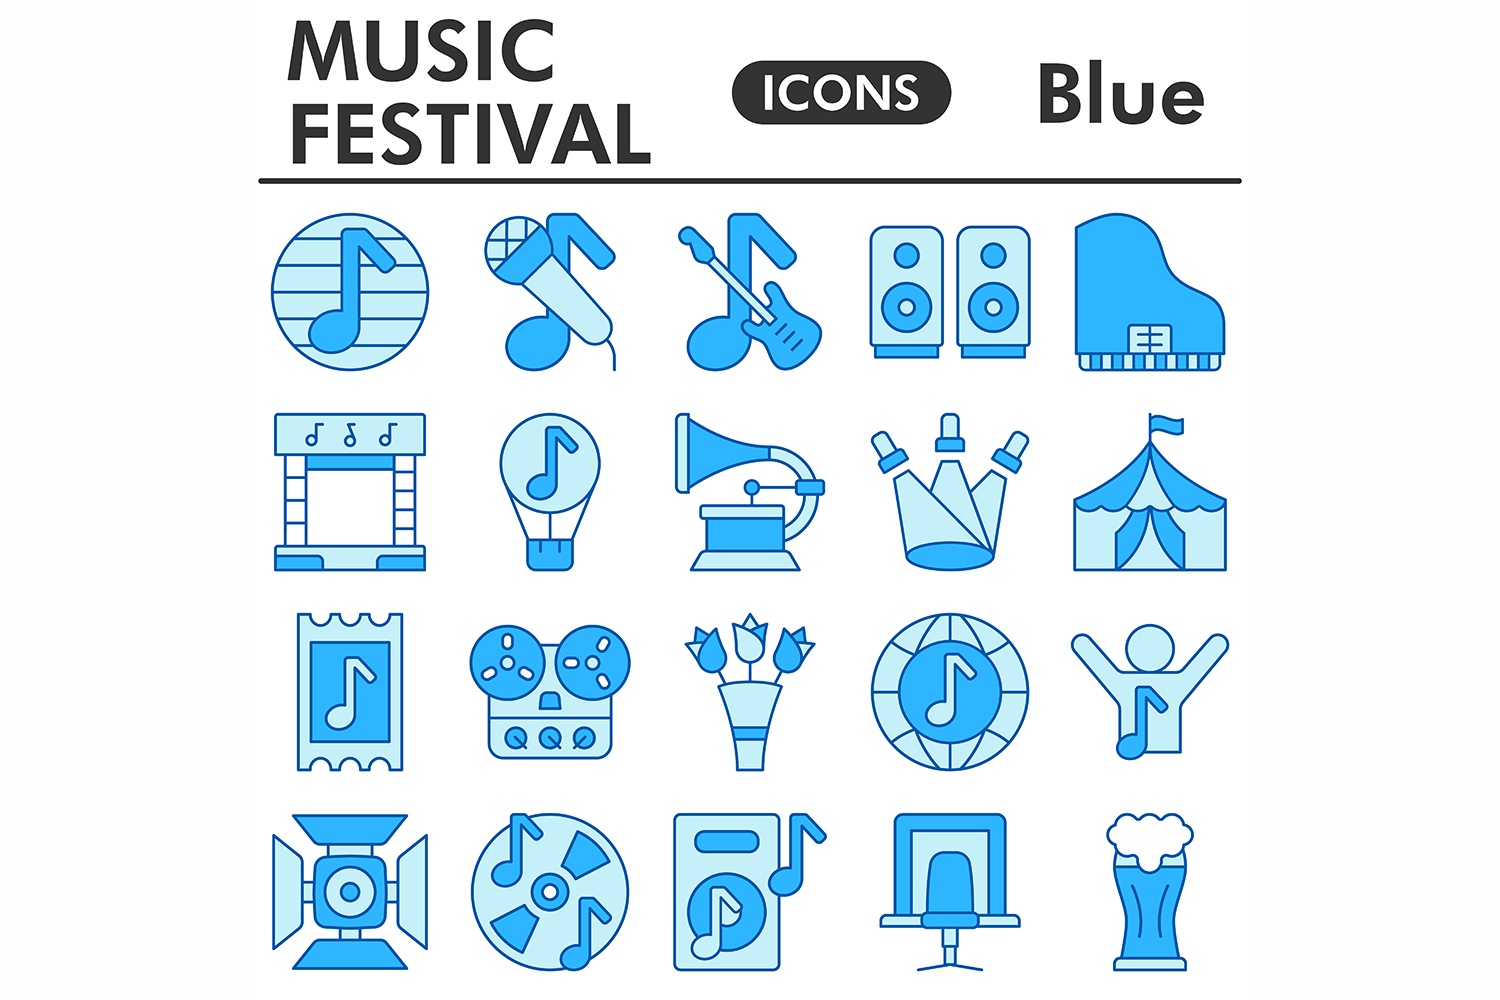 Muzic festival icons set, blue style pinterest preview image.